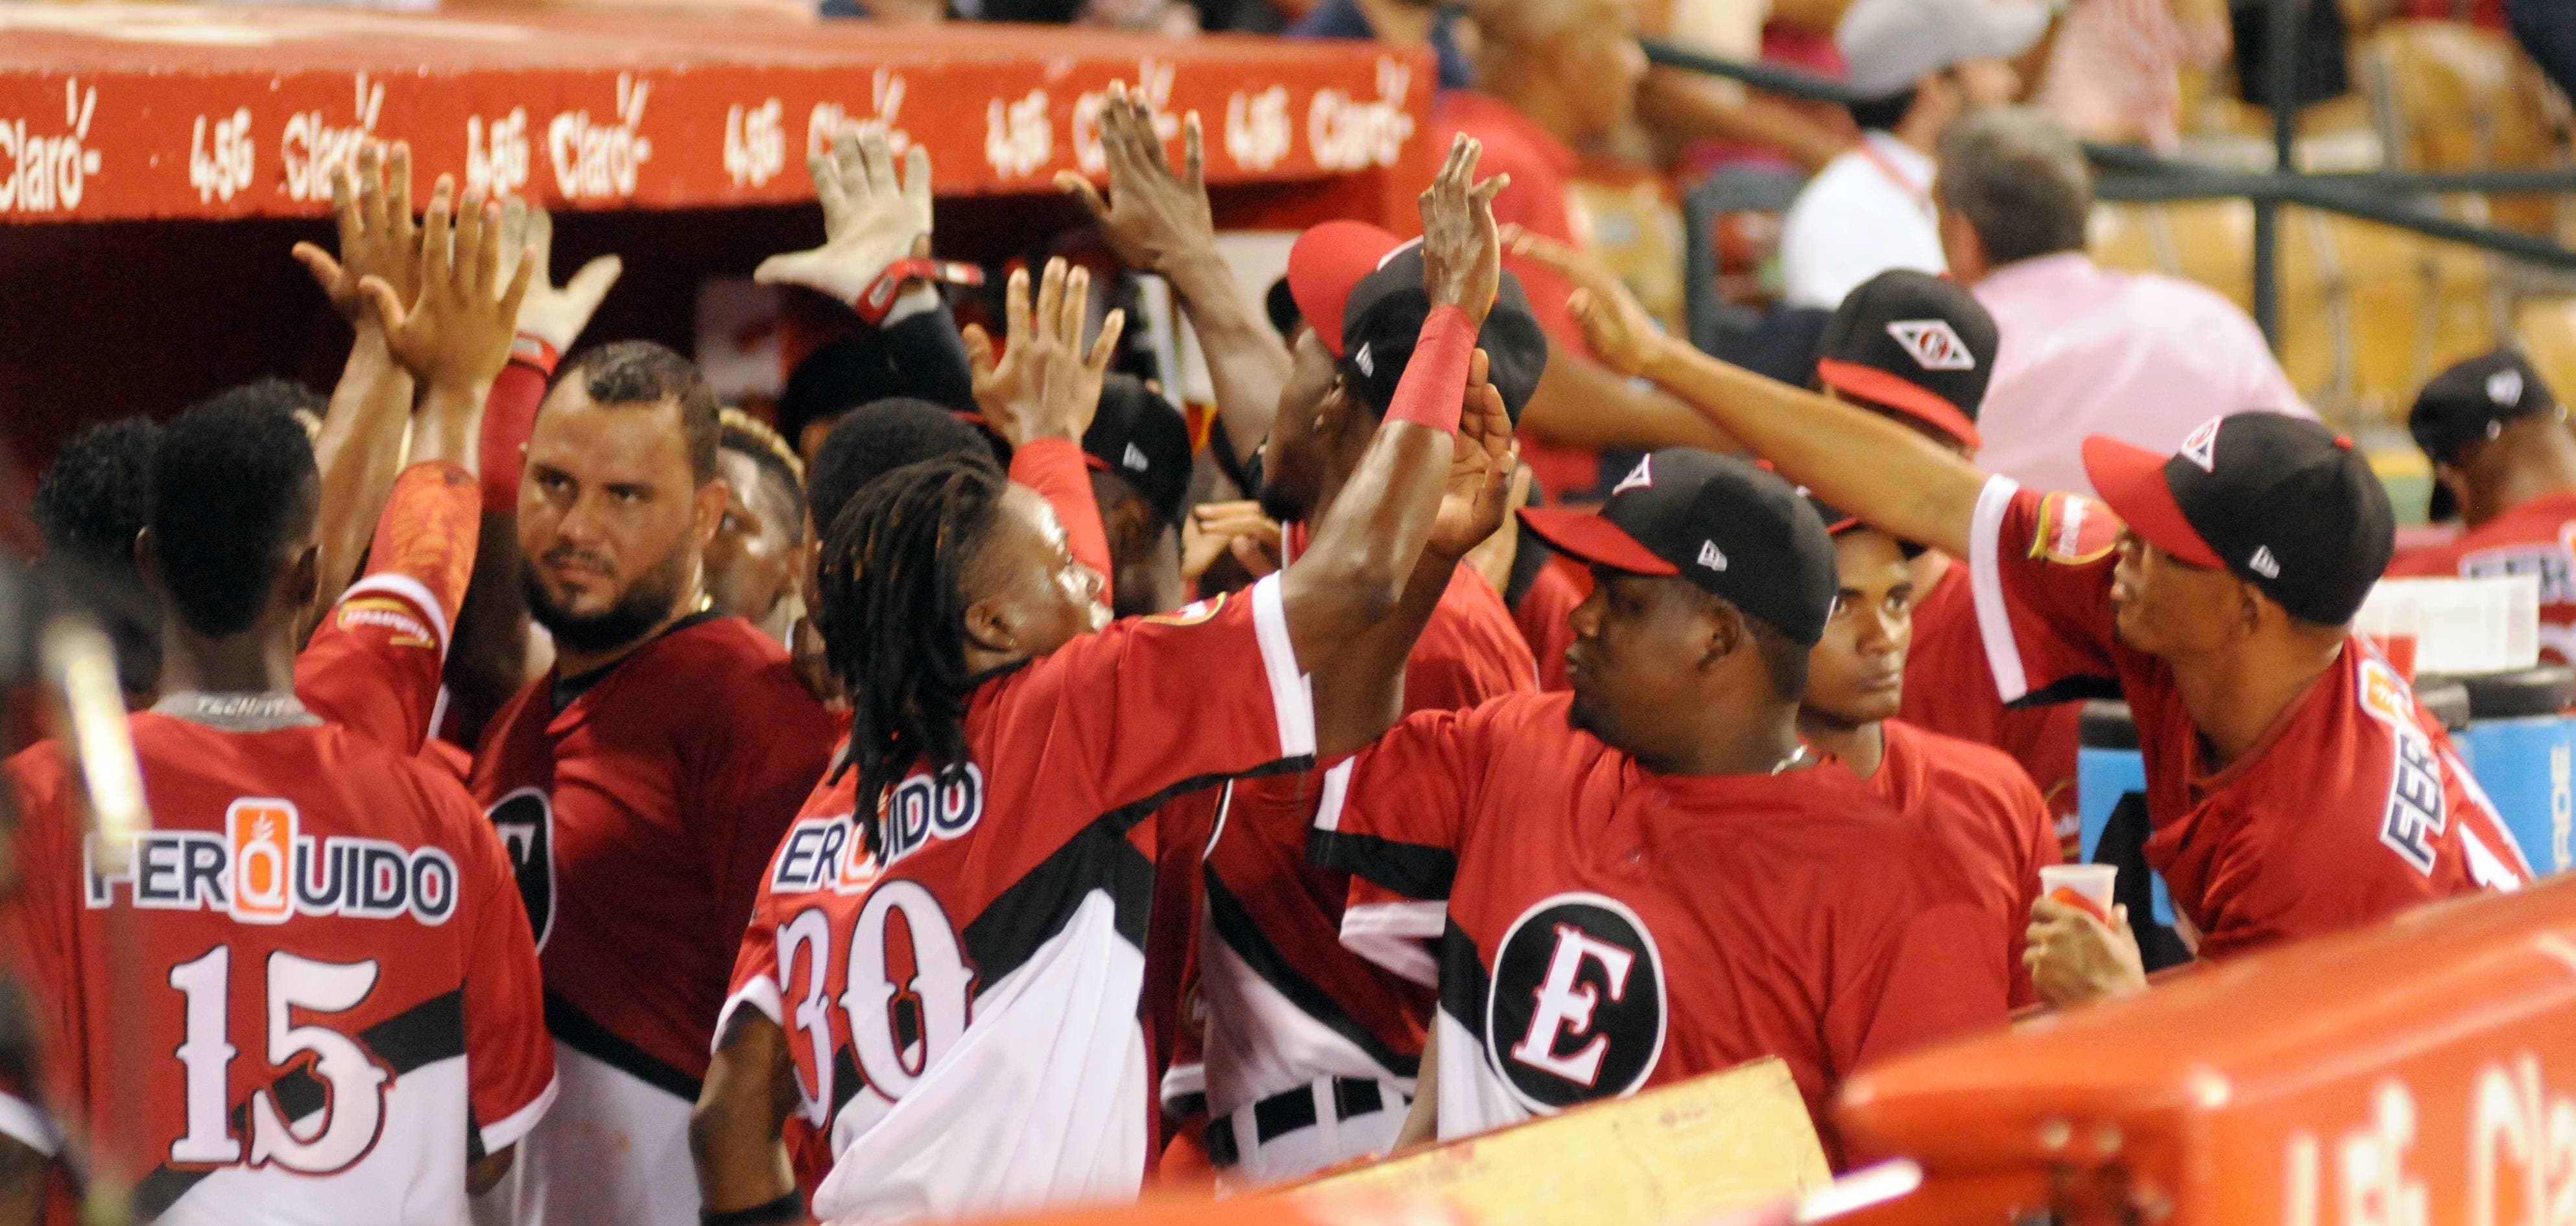 Leones se quedan solos en la cima del béisbol dominicano